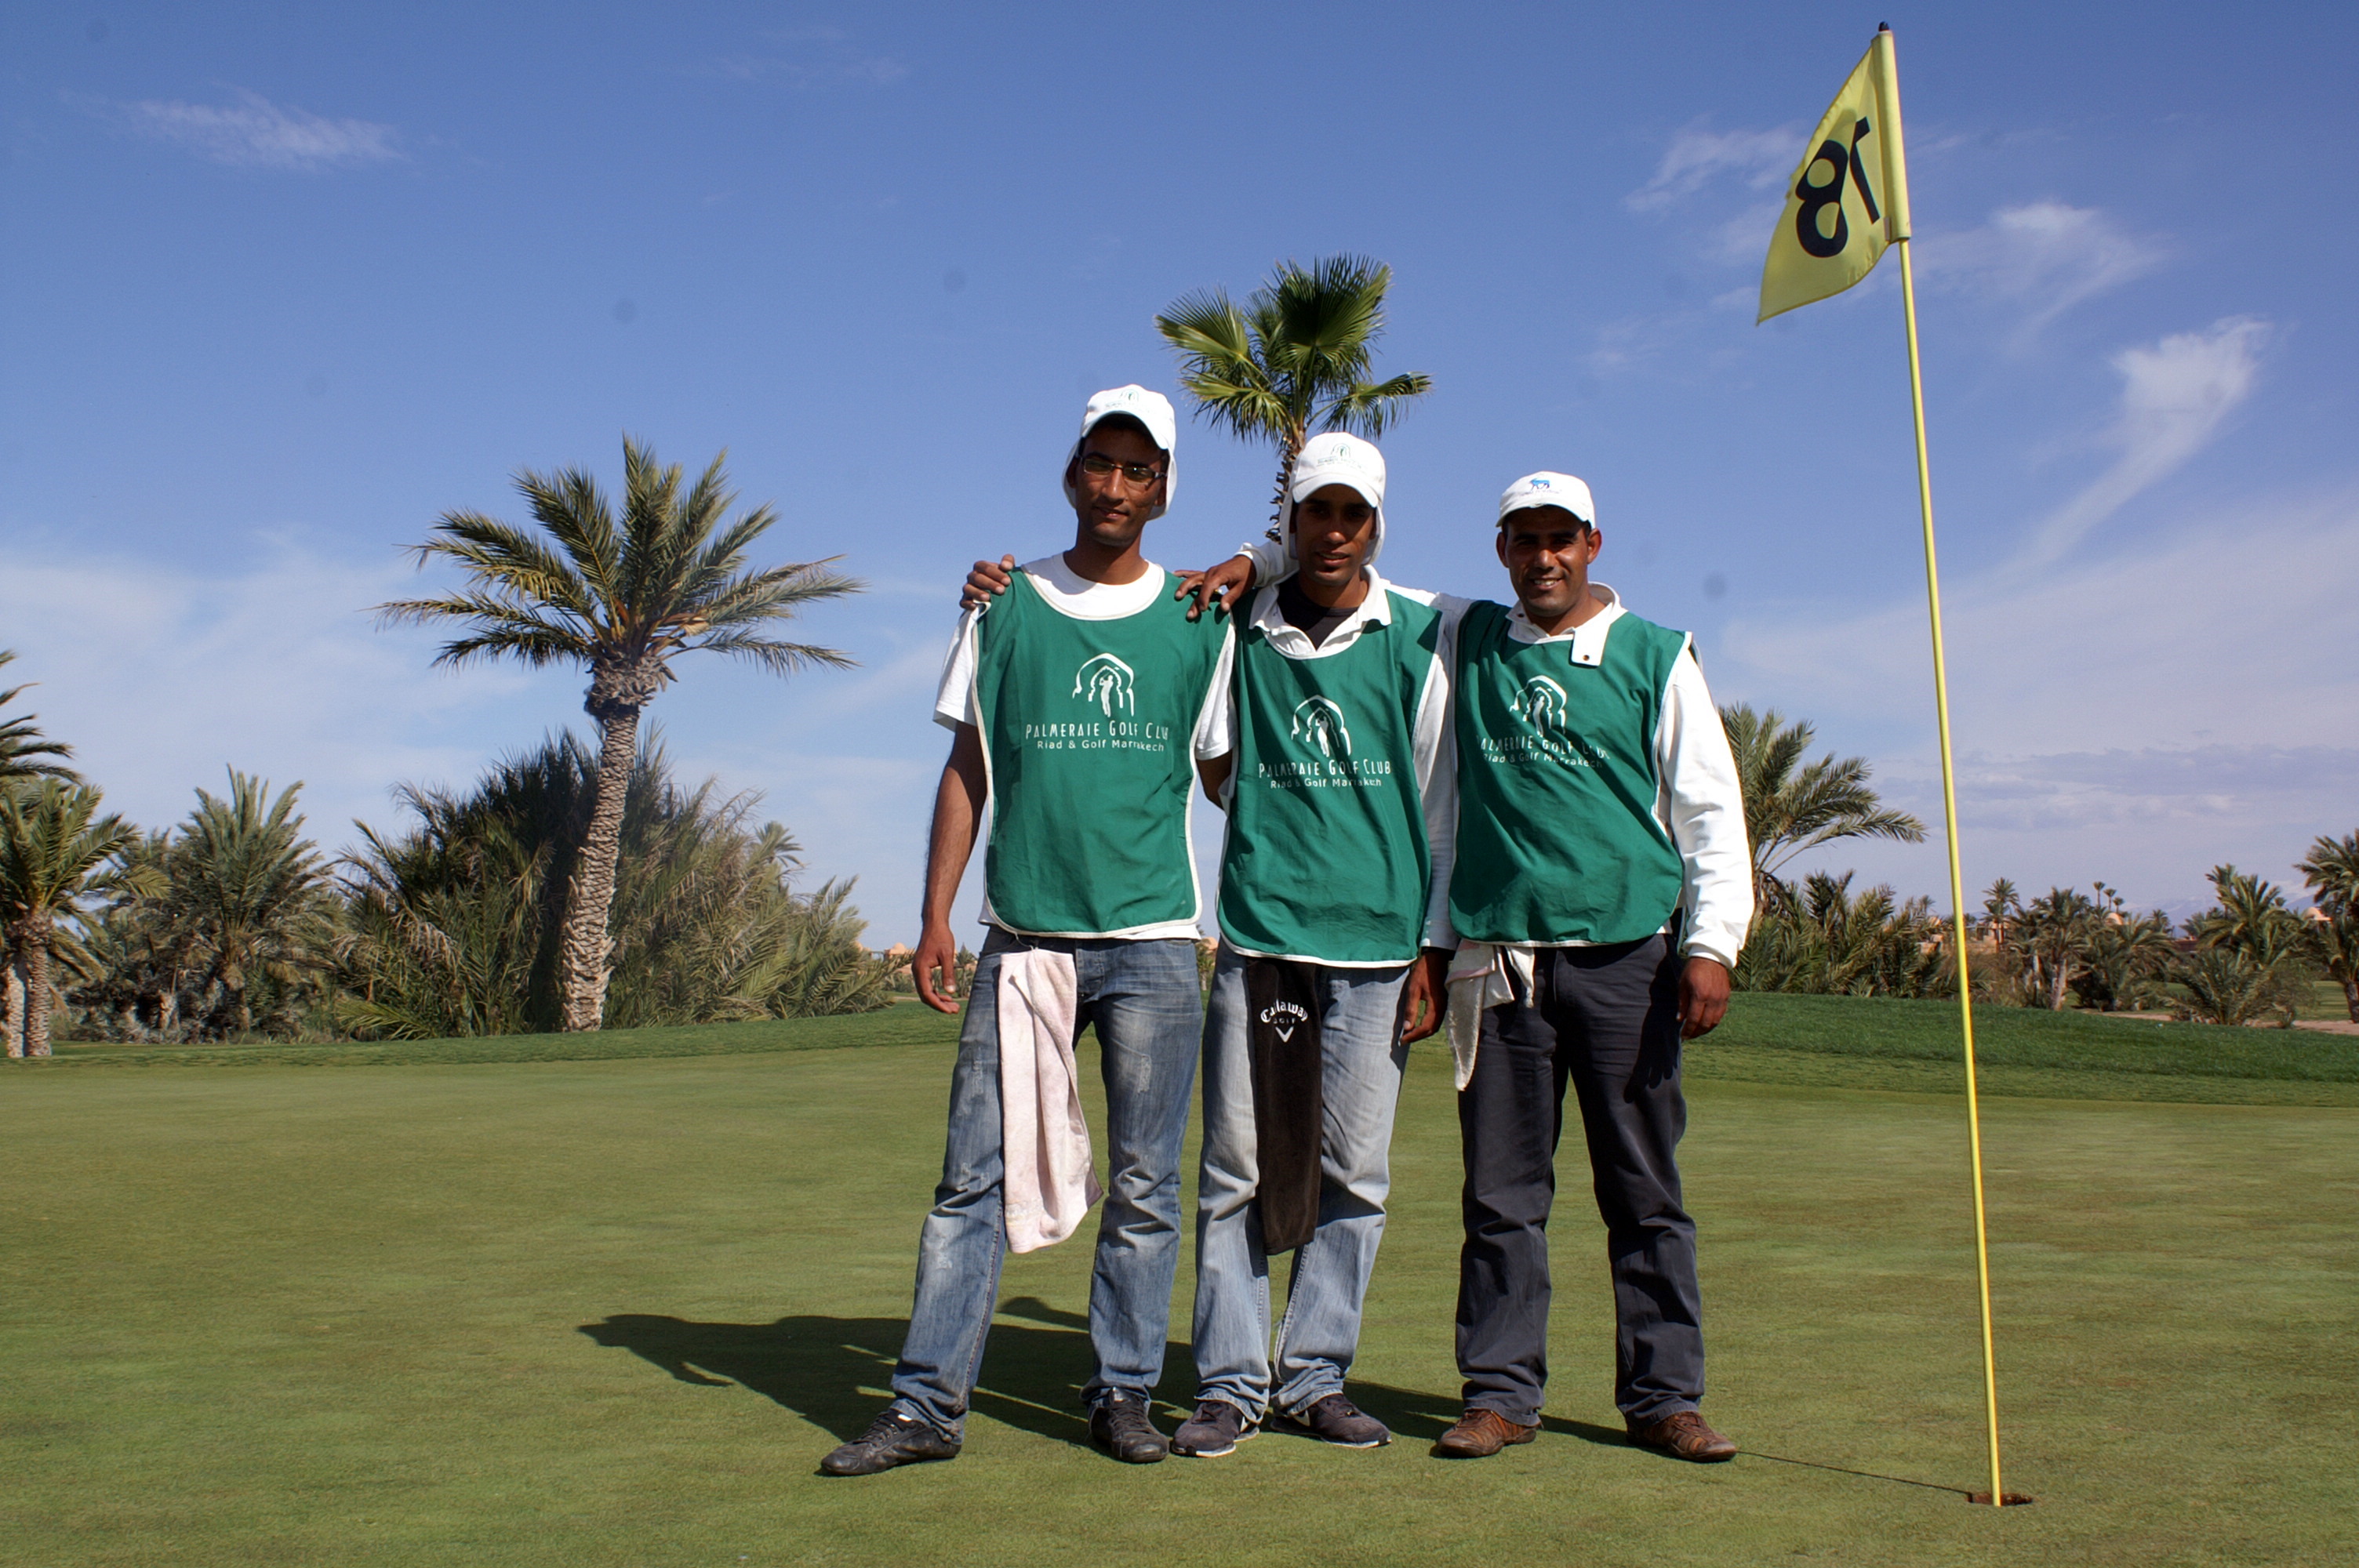 Caddies on green 18 in La Palmeraie golf course in Marrakech, Morocco